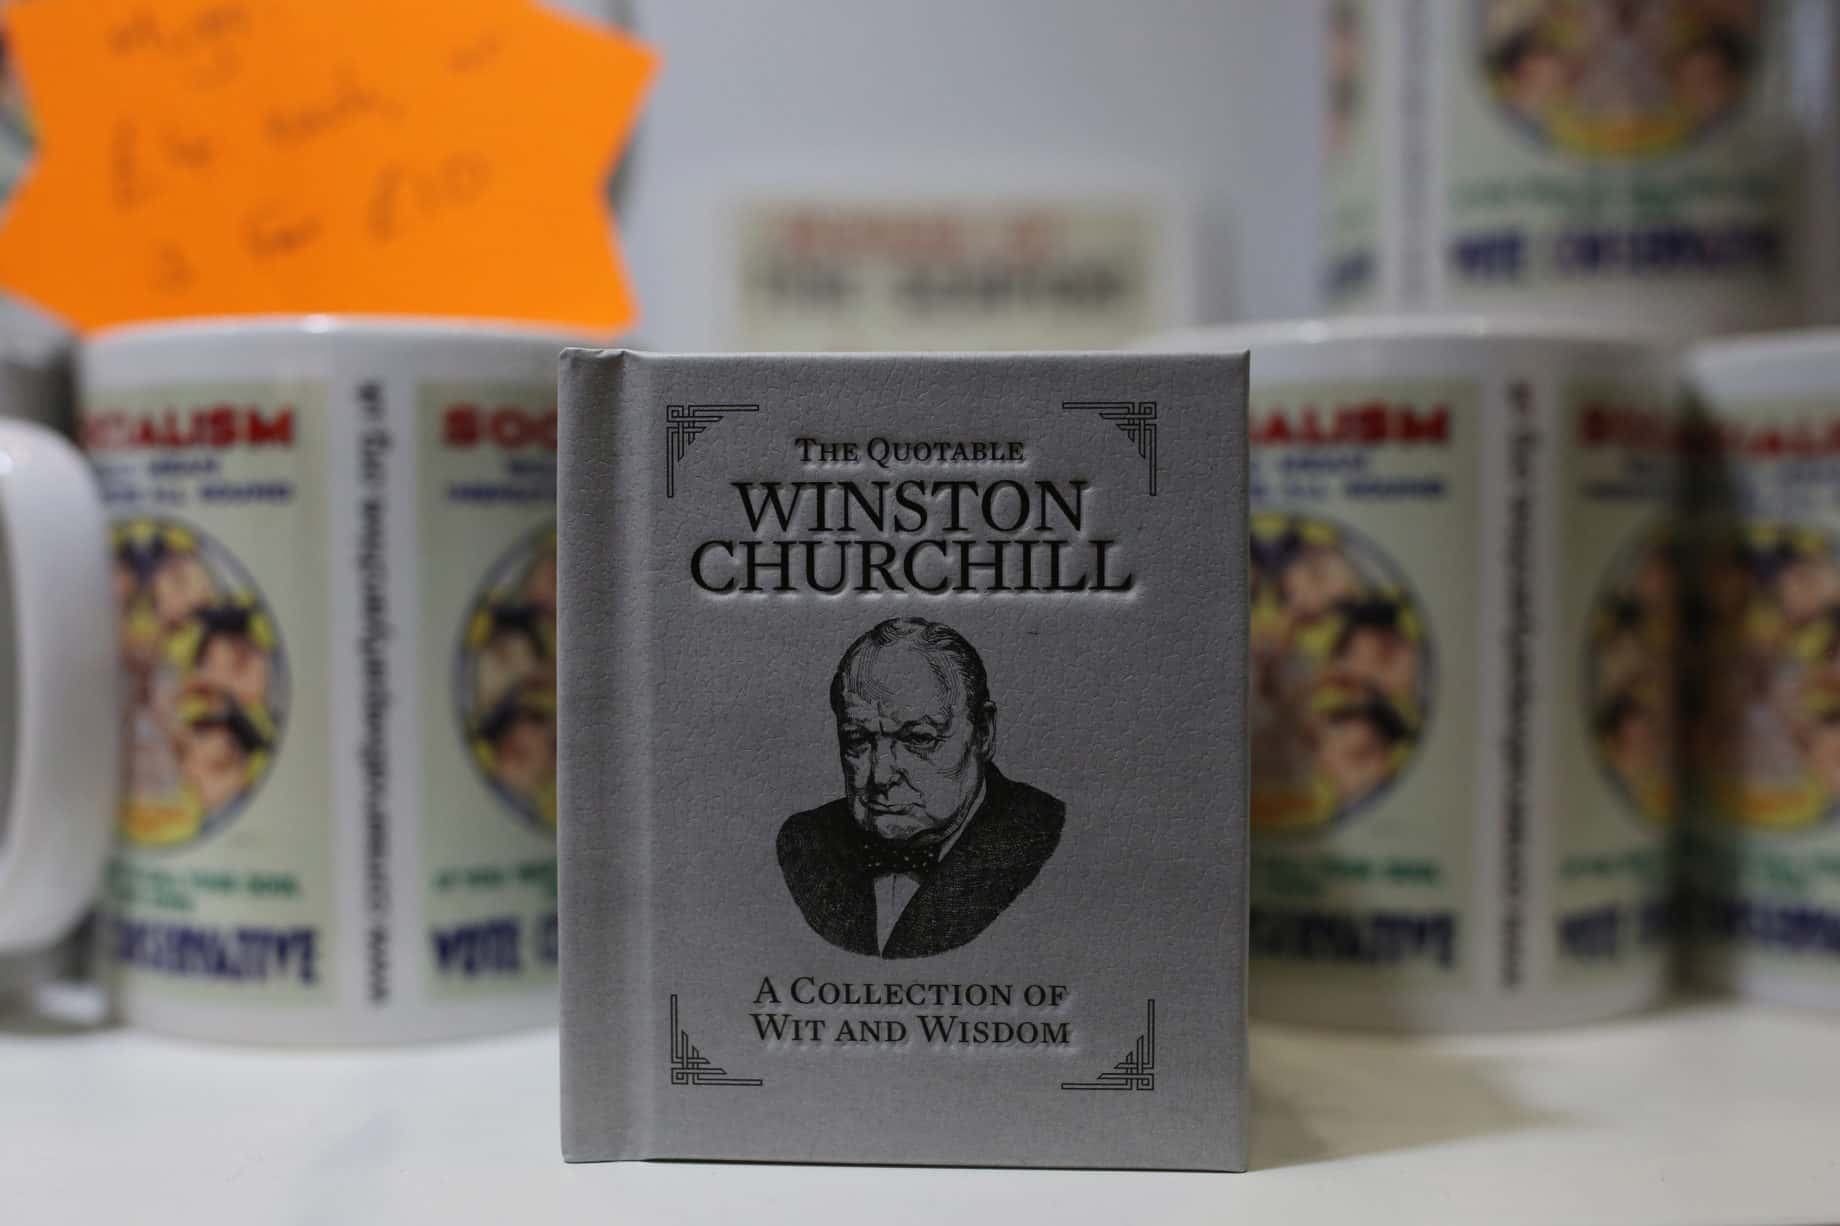 Winston Churchill facts